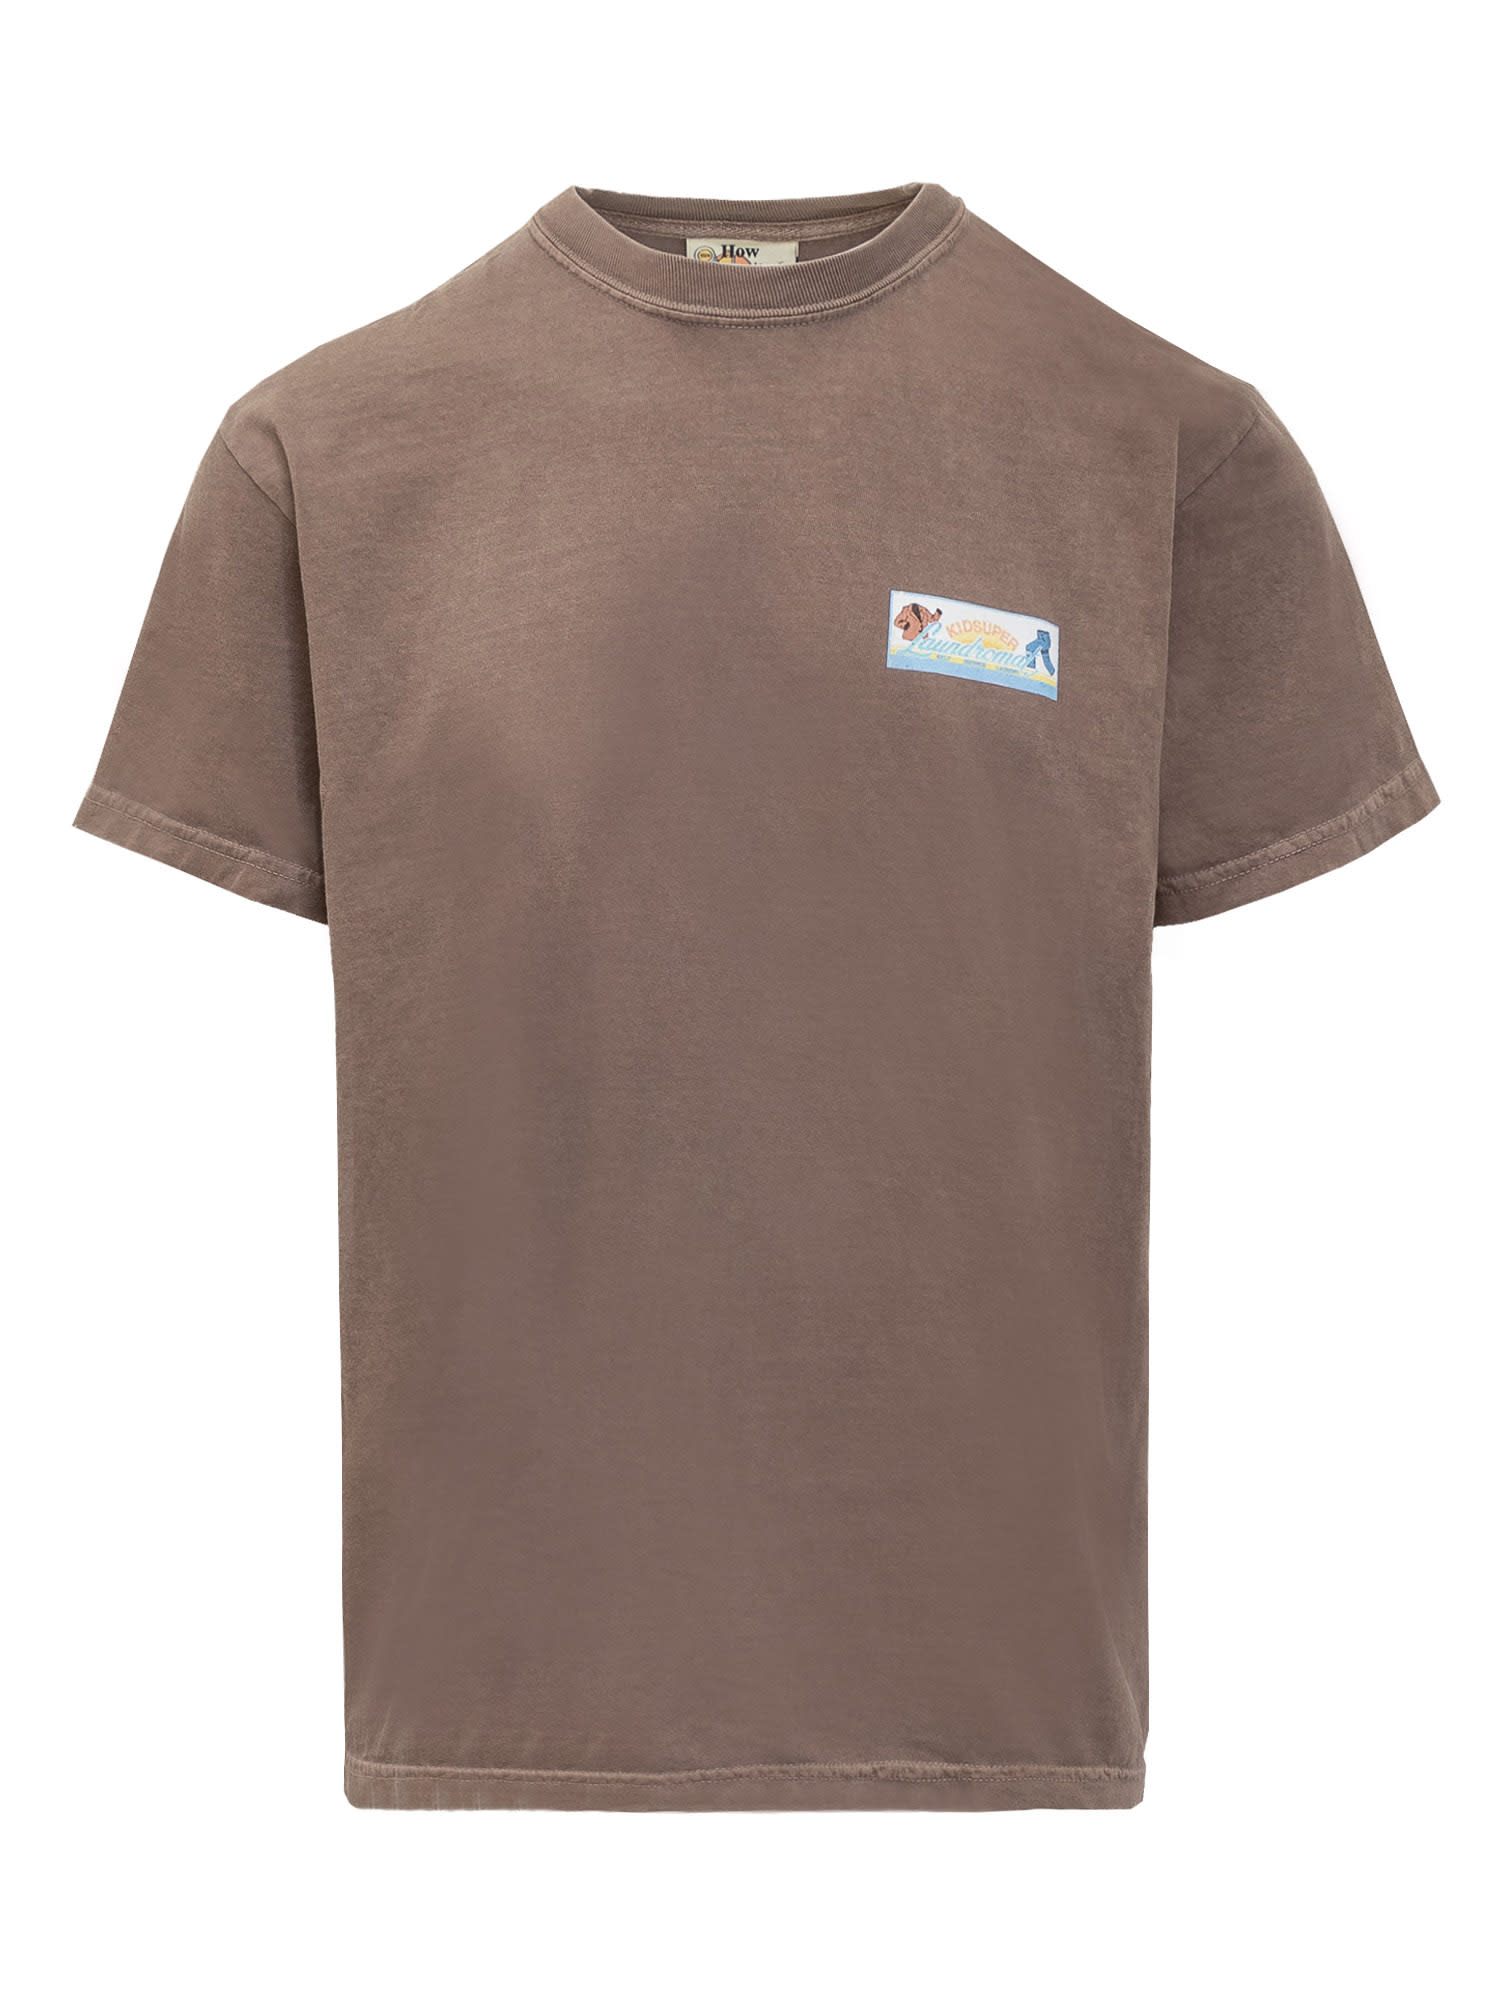 Kidsuper Laundromat T-shirt In Brown